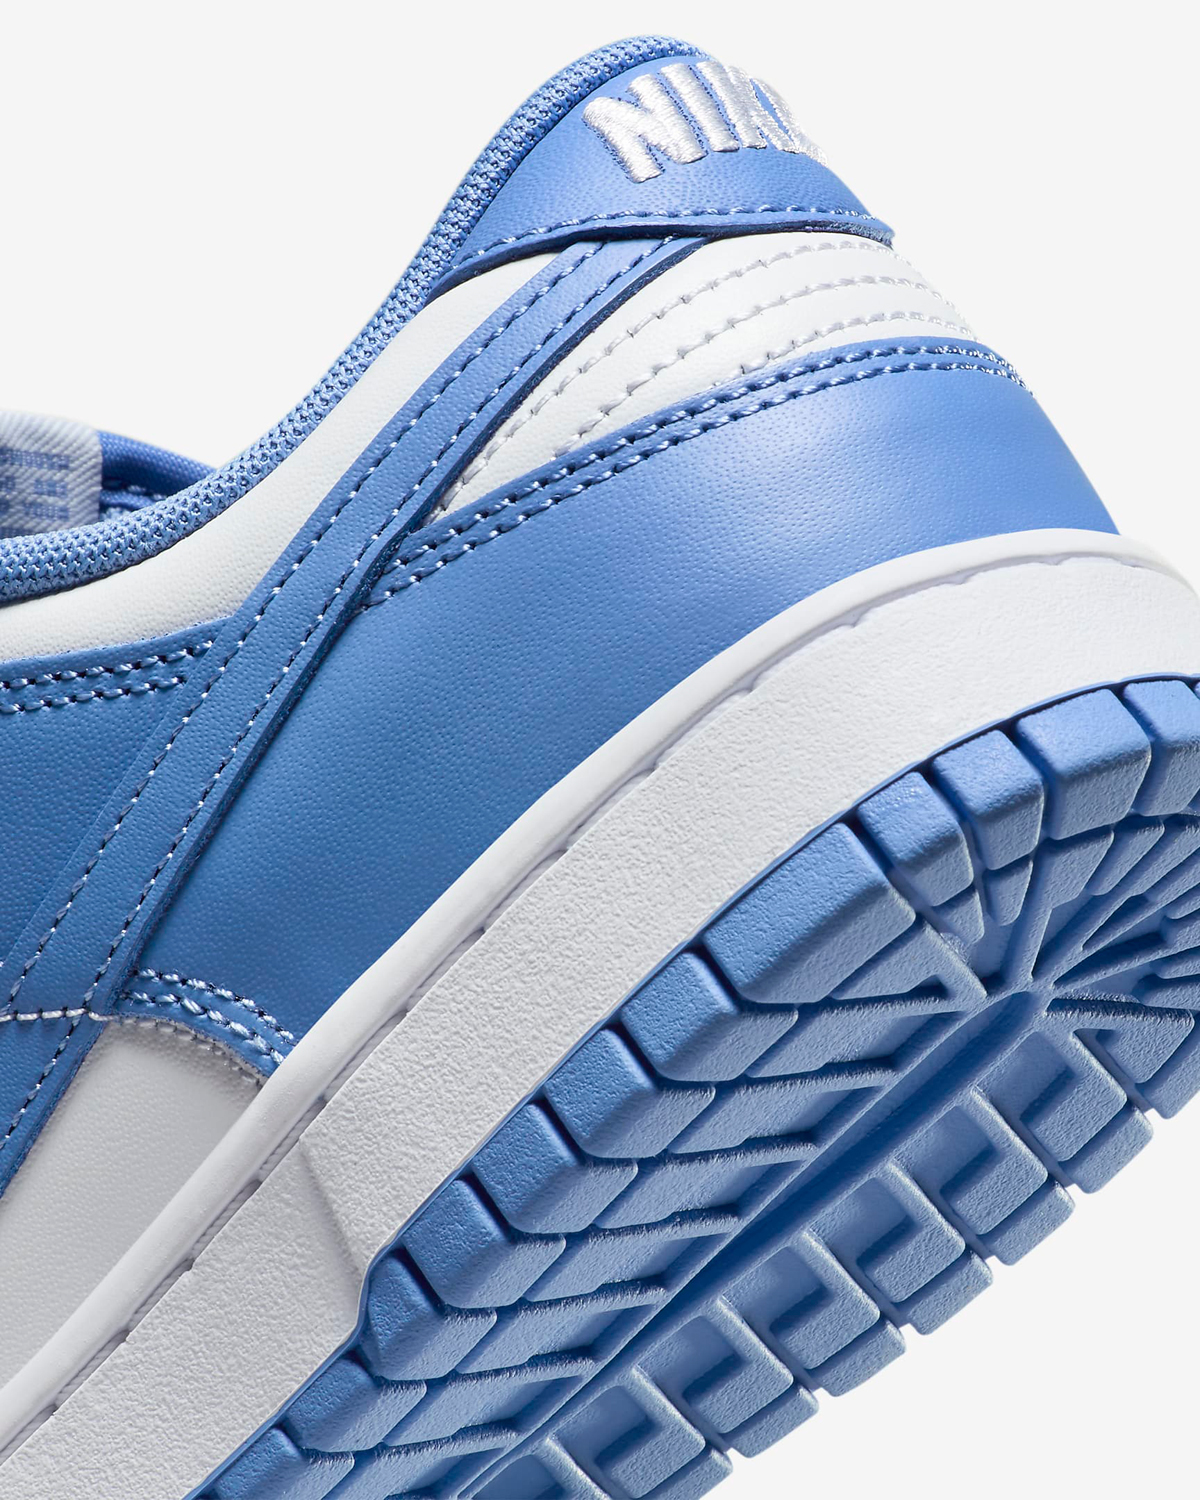 Nike-Dunk-Low-Polar-Blue-Release-Date-8